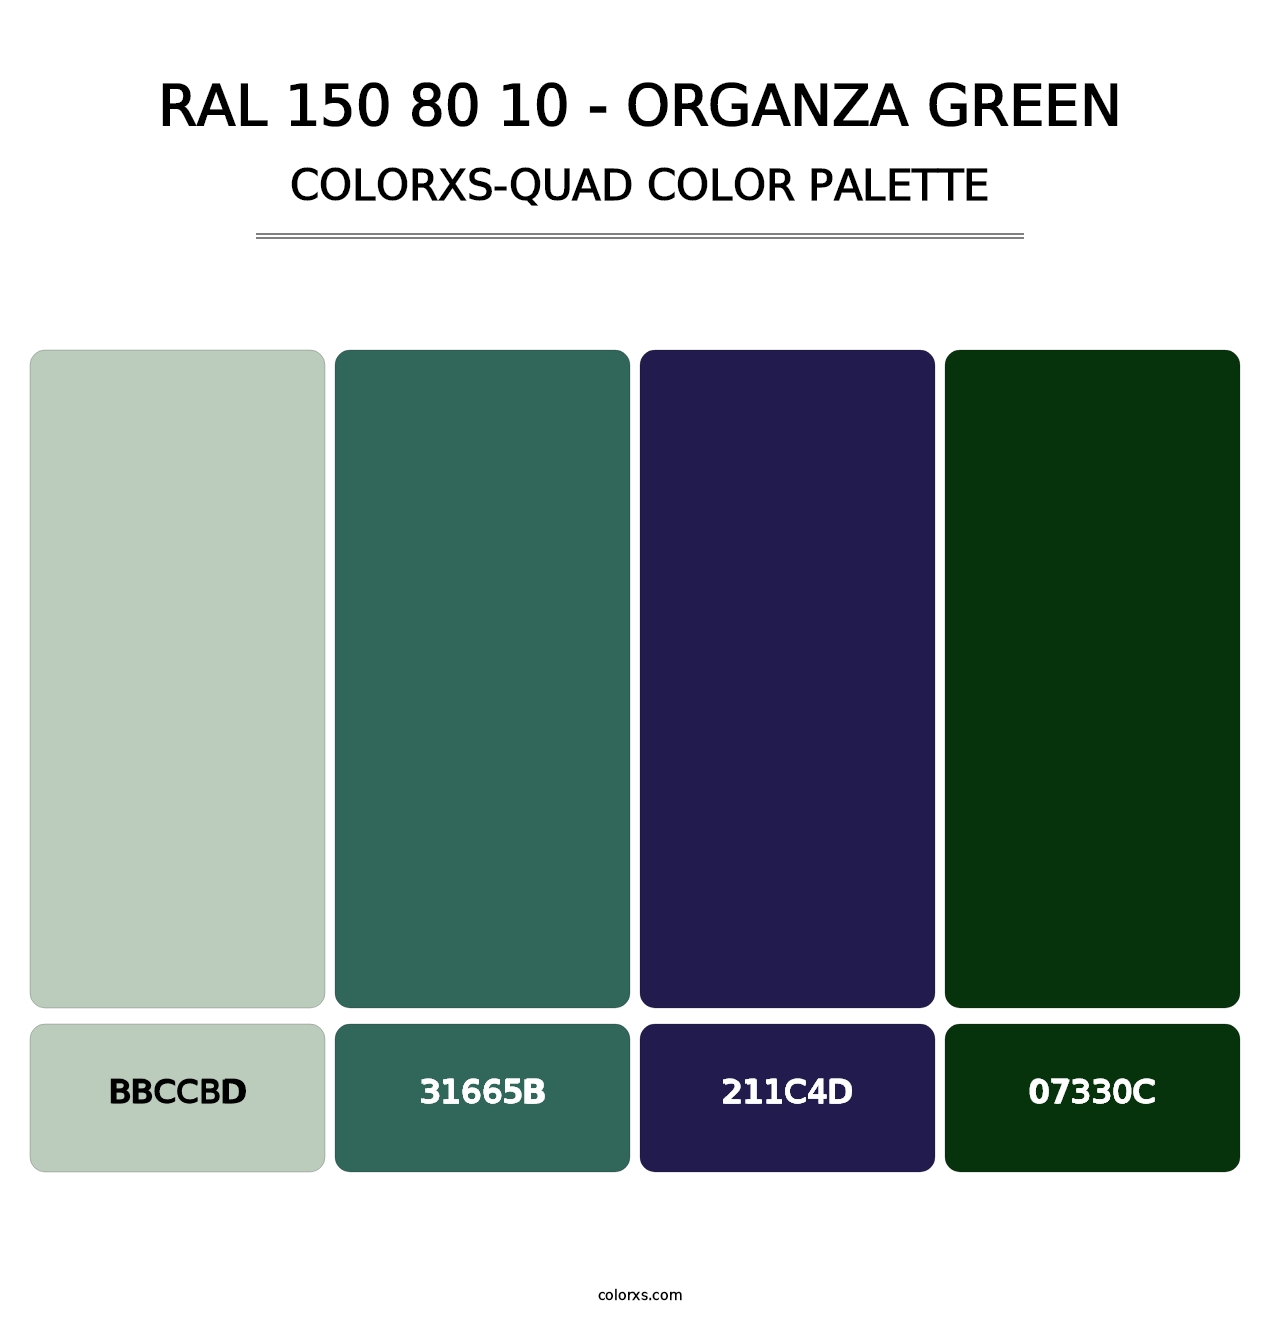 RAL 150 80 10 - Organza Green - Colorxs Quad Palette